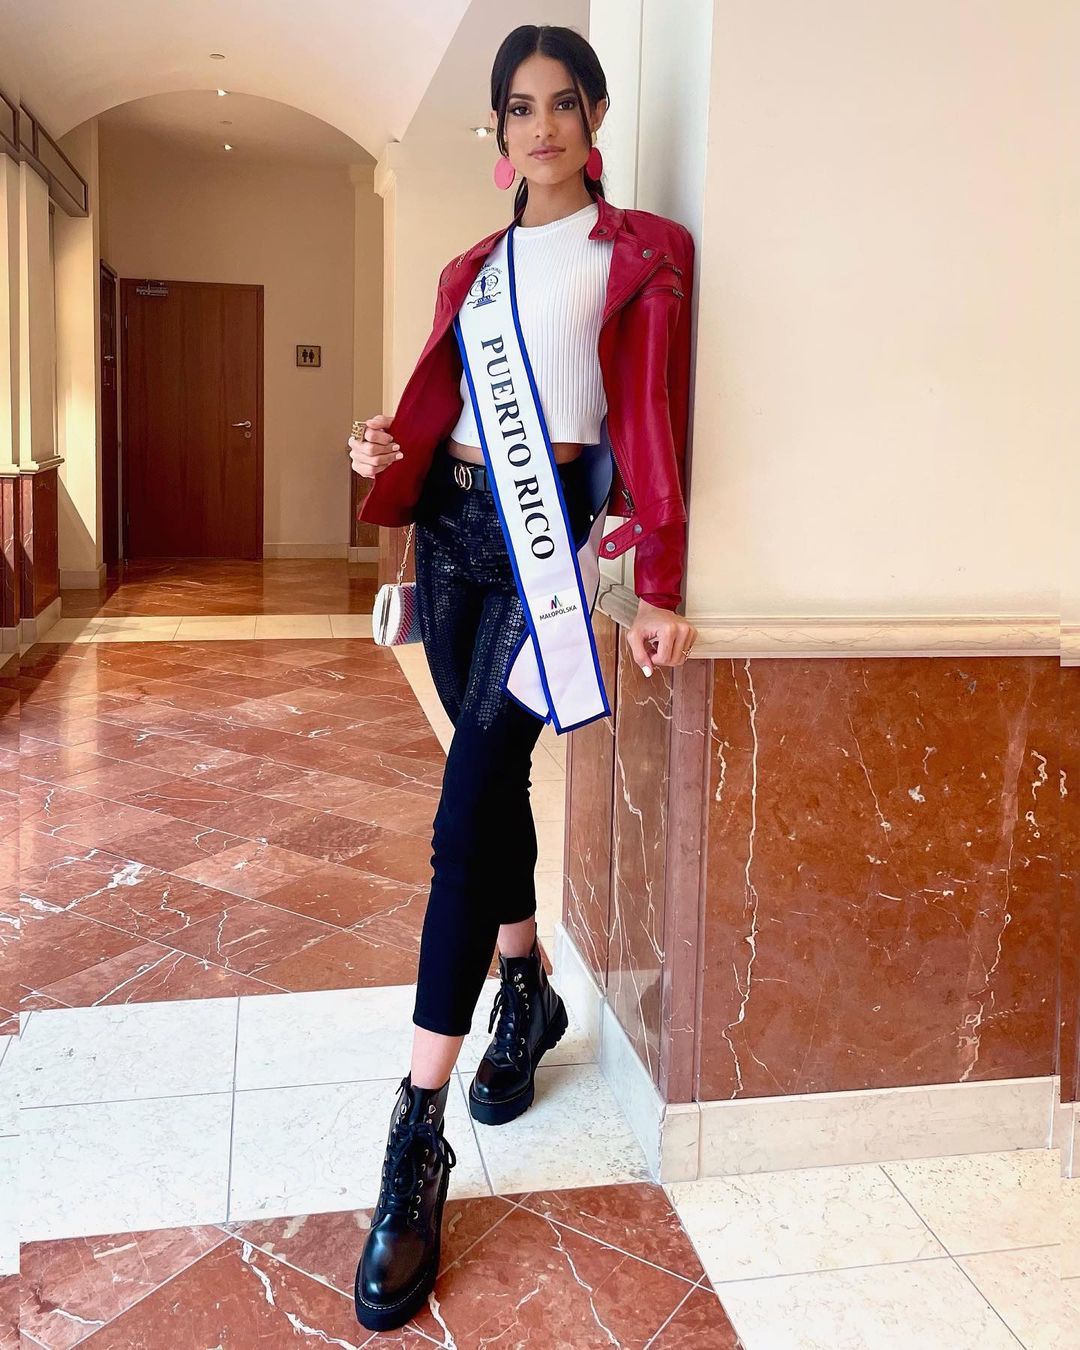 karla guilfu, top 5 de miss universe 2023/1st runner-up de miss supranational 2021. - Página 4 22944716